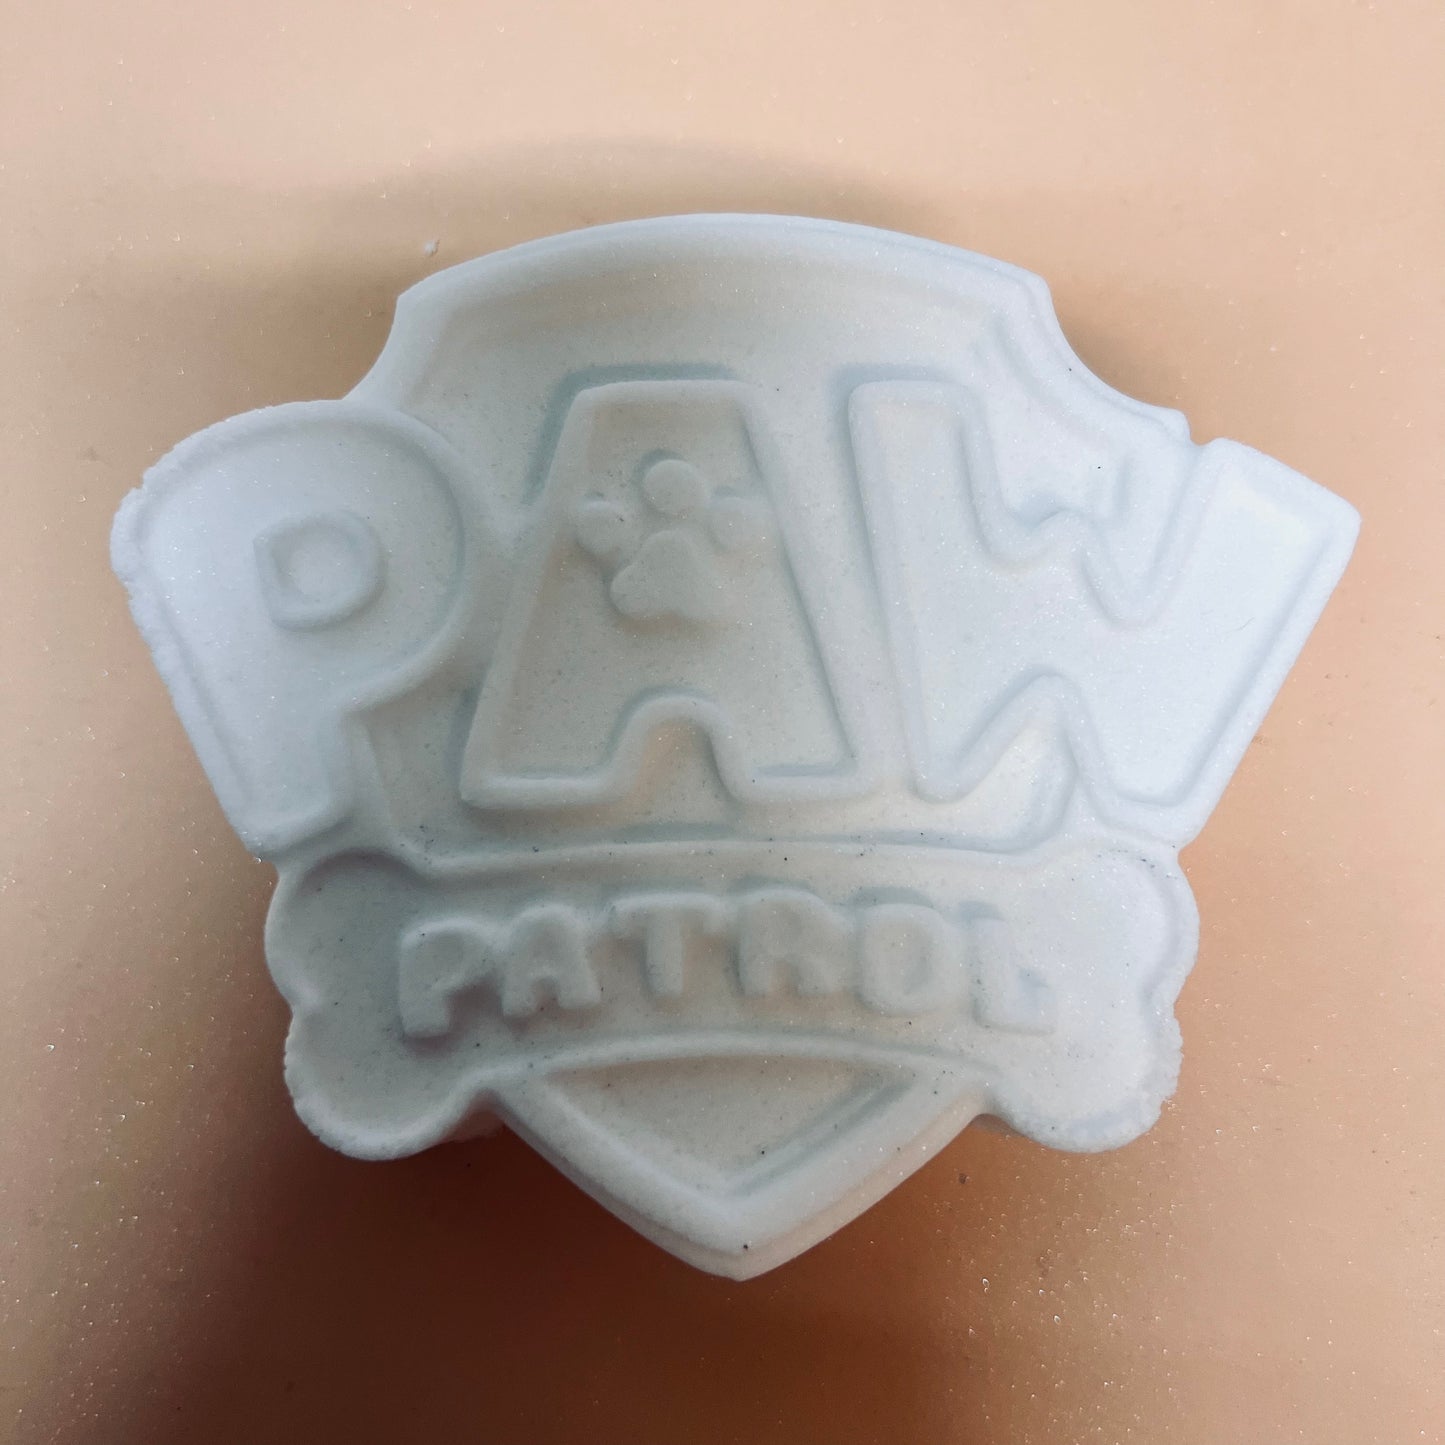 Paw Patrol Logo  (Vacuum Form Mould)